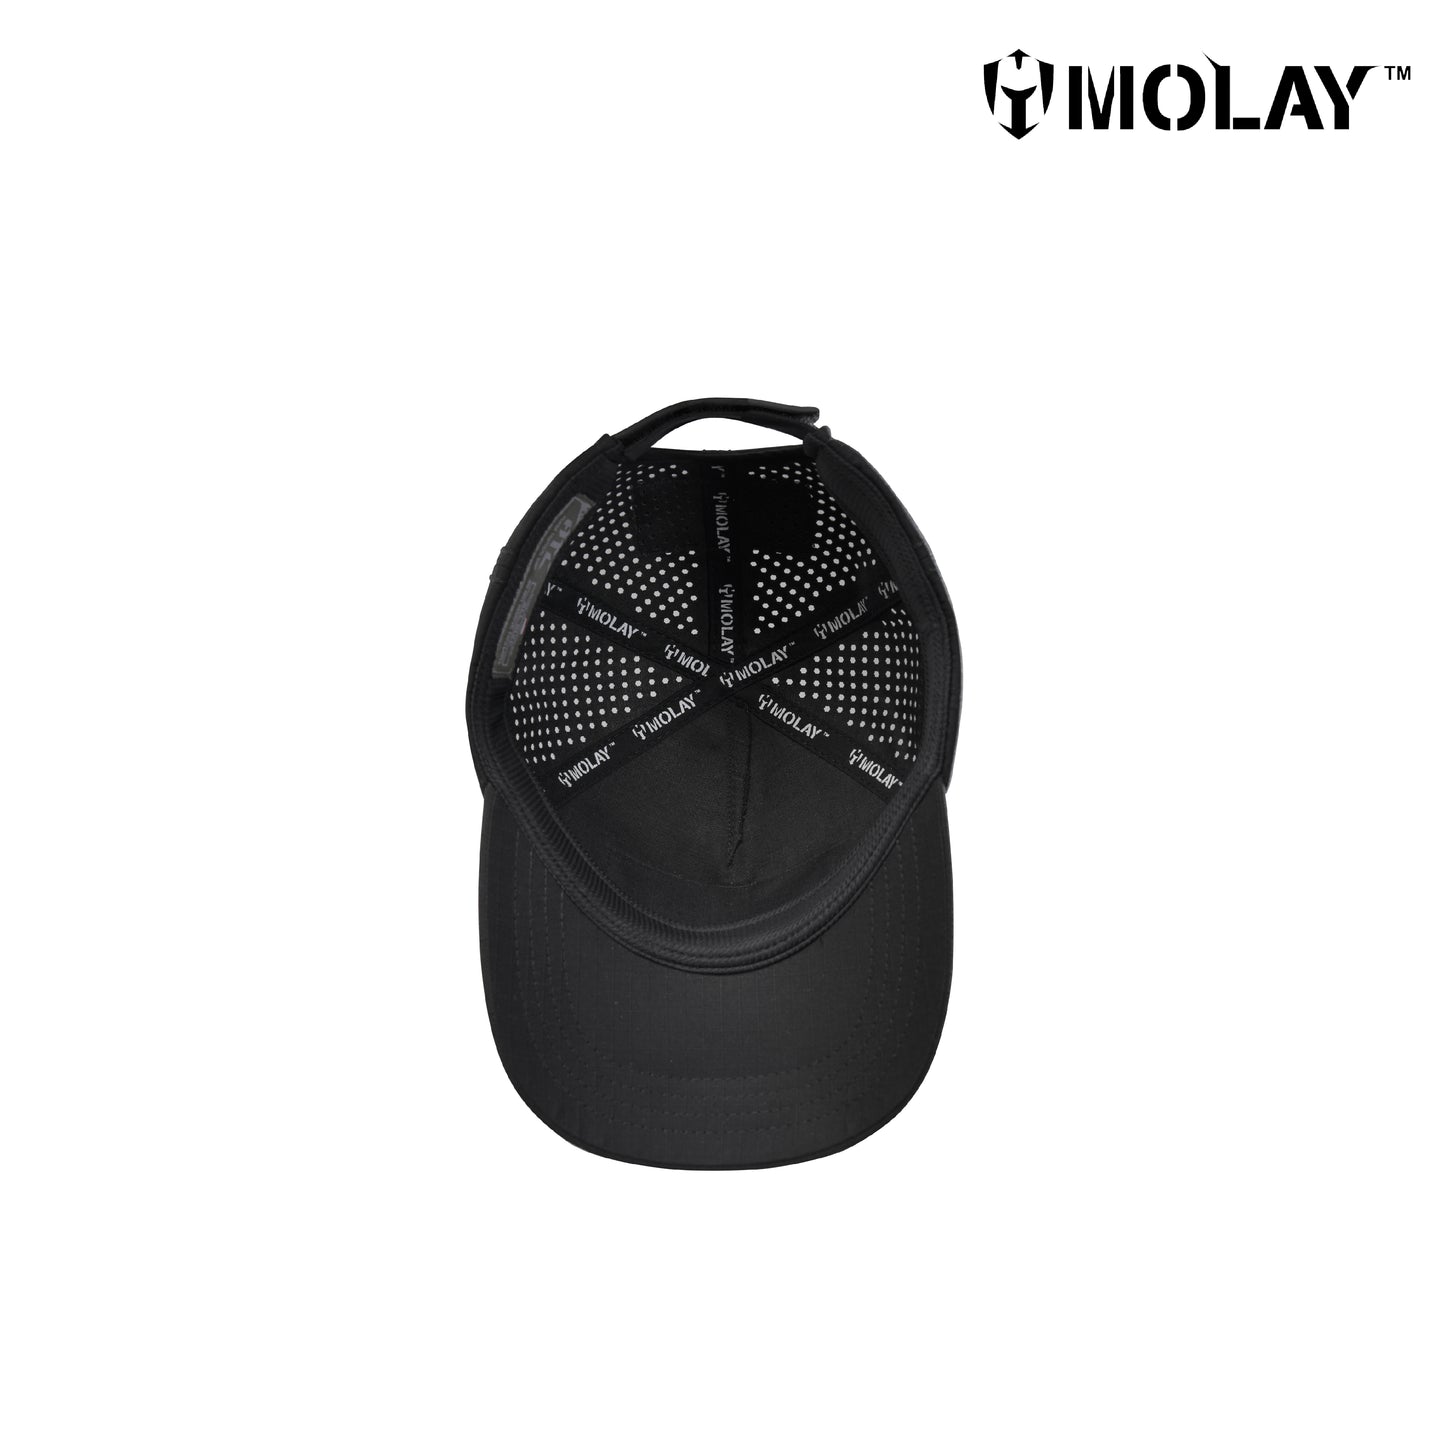 Molay® Spec-Ops Nylon Cap